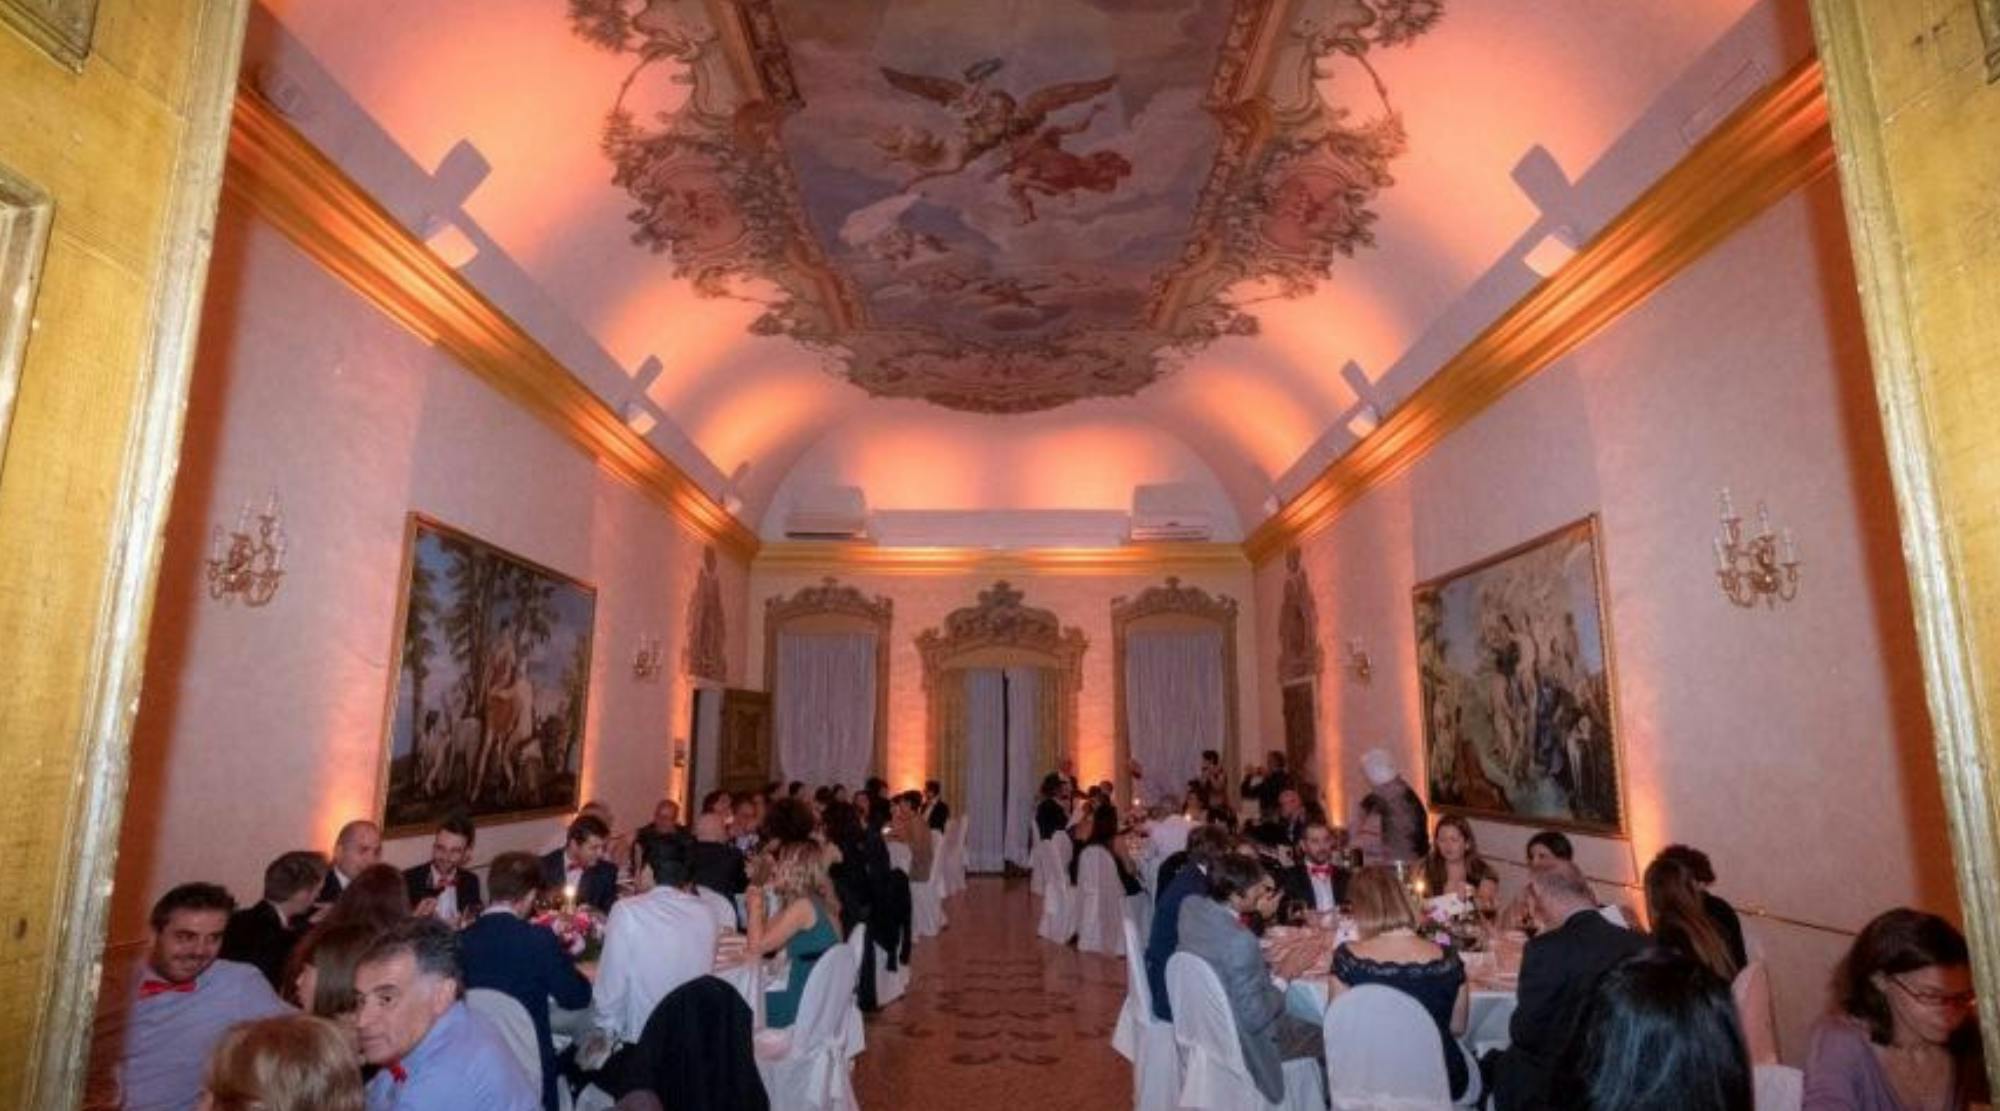 Gala dinner in an elegant room